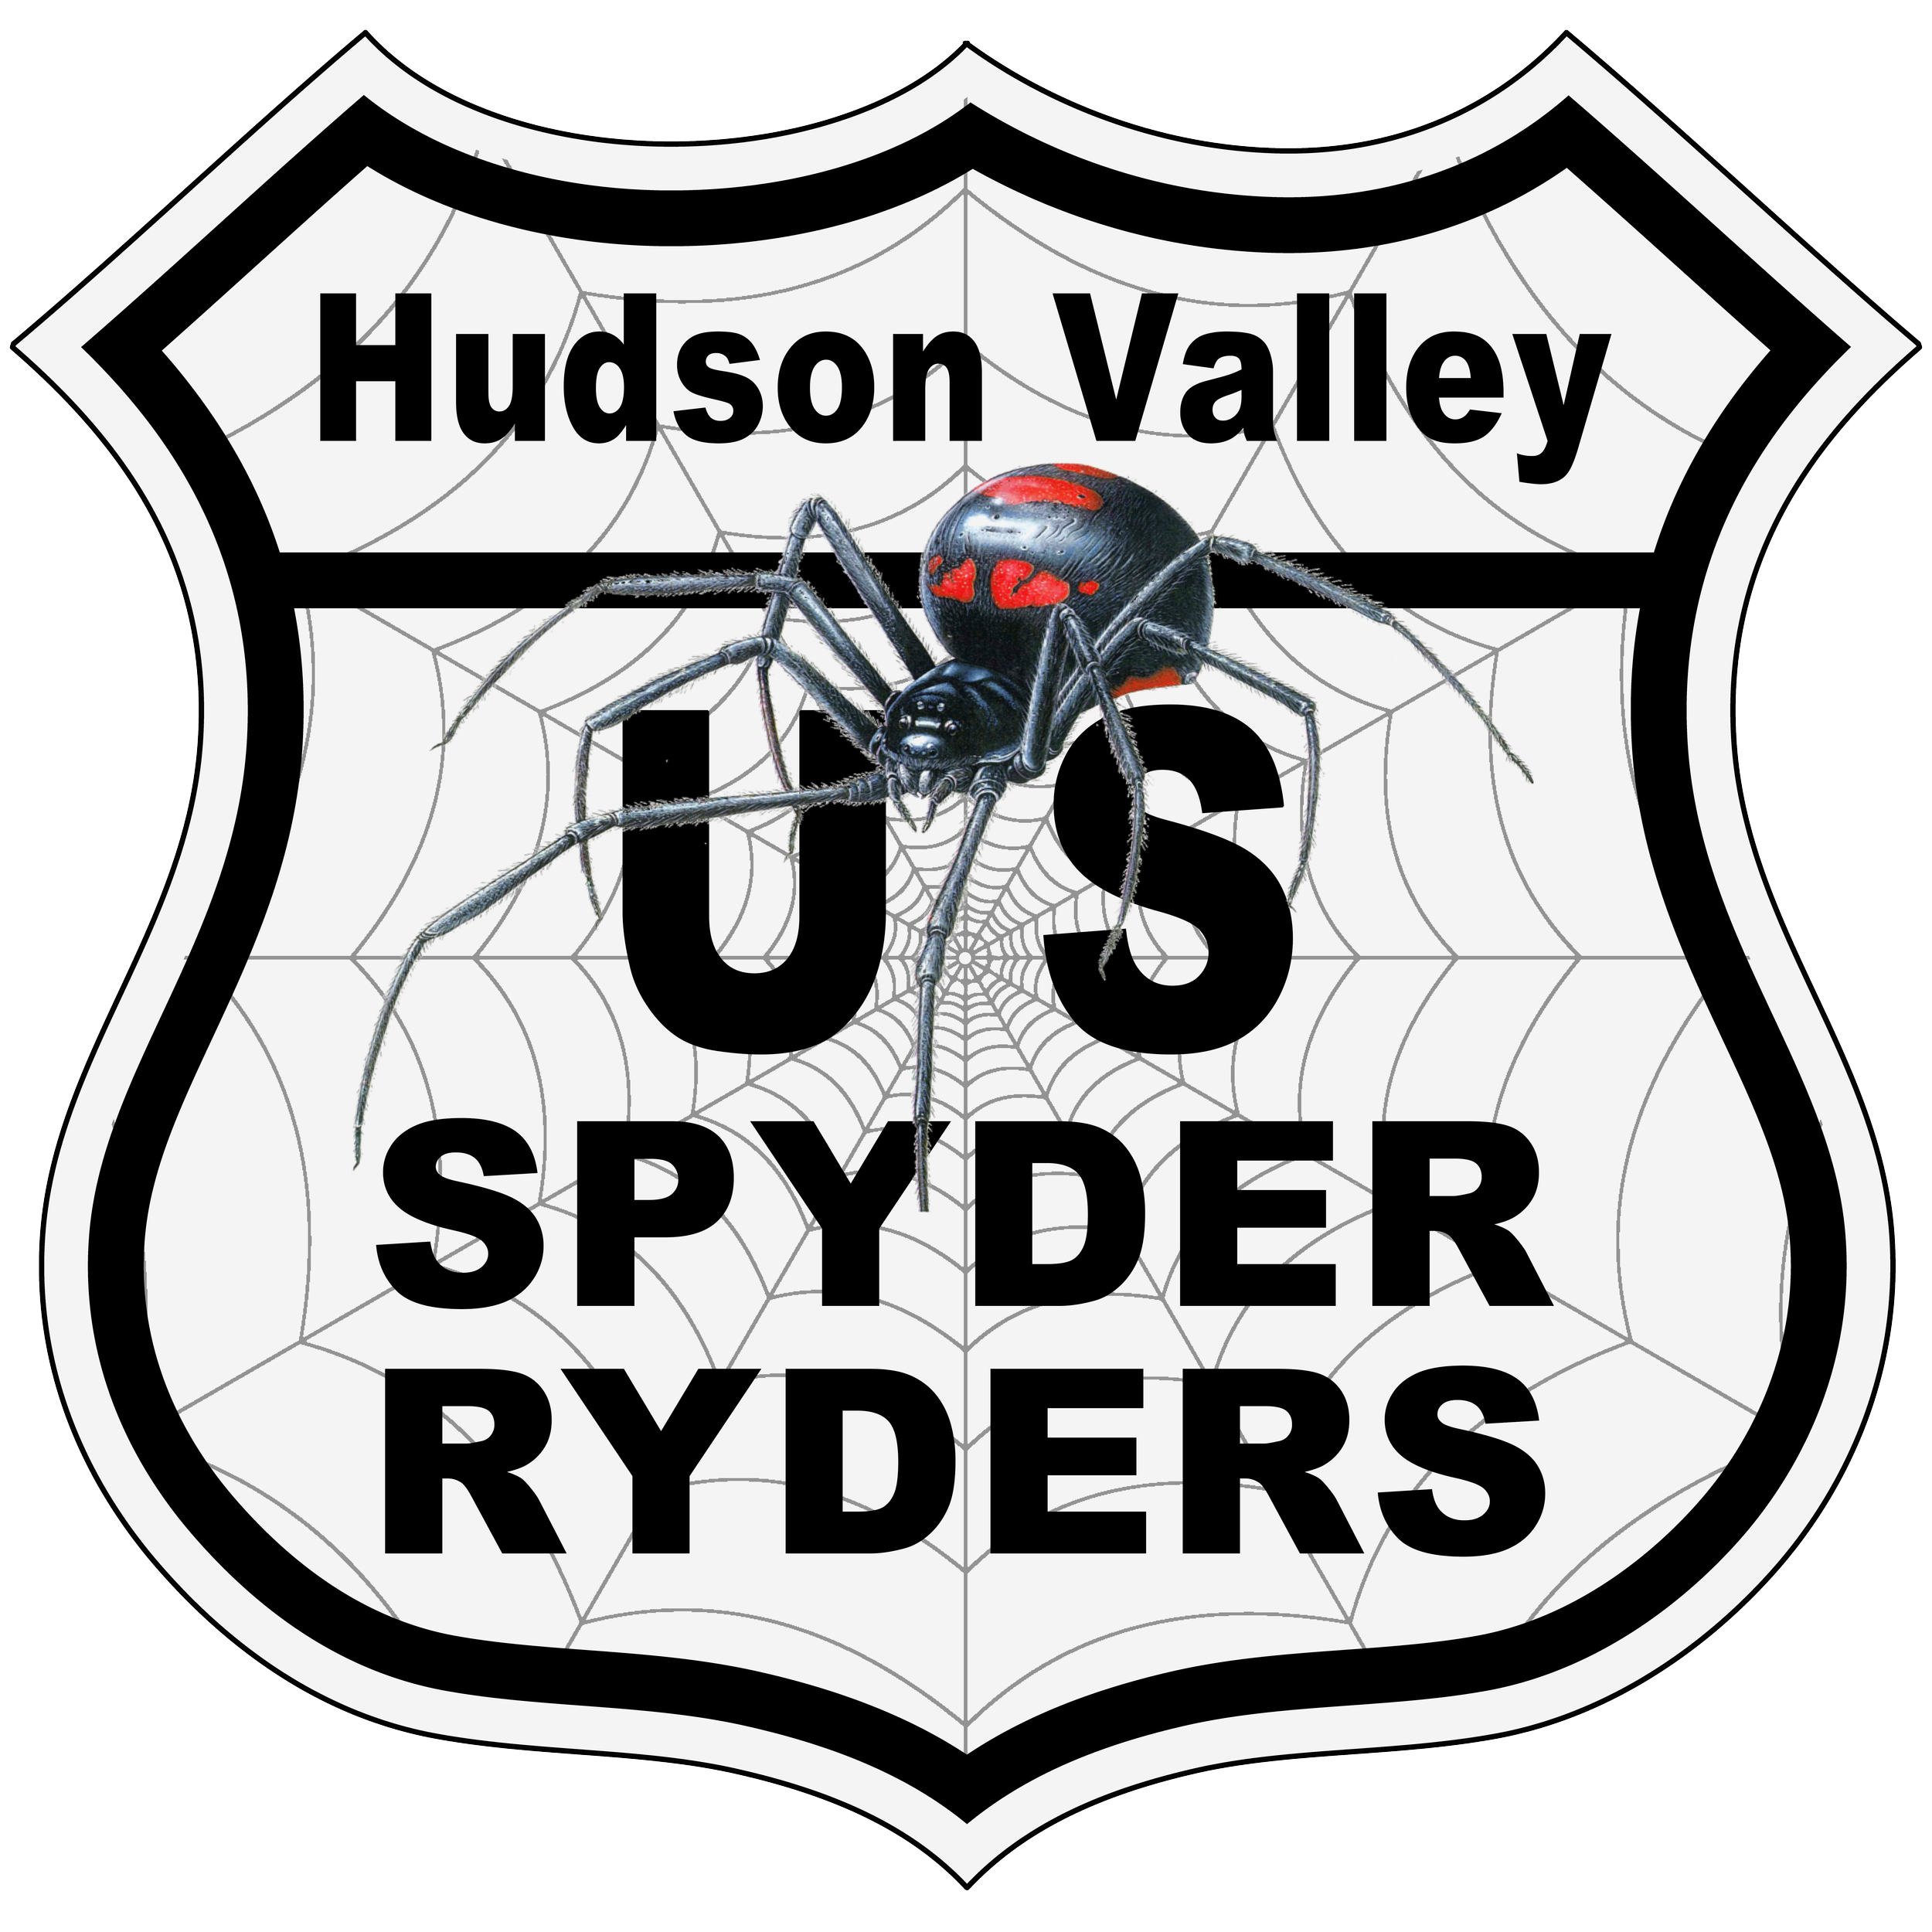 US_Spyder_Ryder_NY Hudson Valley.png